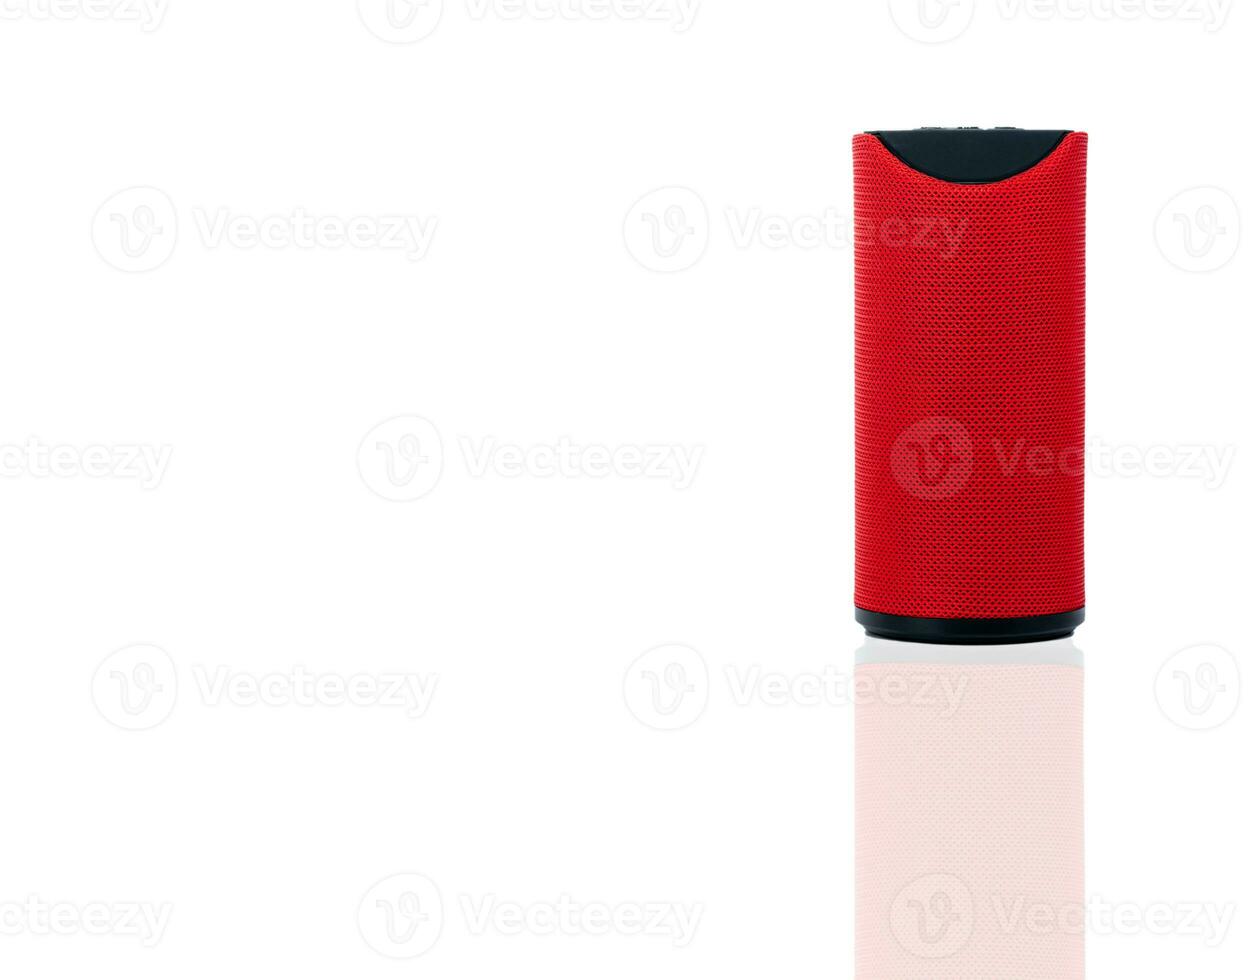 draadloze portable spreker geïsoleerd Aan wit achtergrond. rood digitaal portable luidsprekers. klein geluid muziek- doos spreker. modern ontwerp mini portable draadloze luidspreker. digitaal draadloze technologie. foto